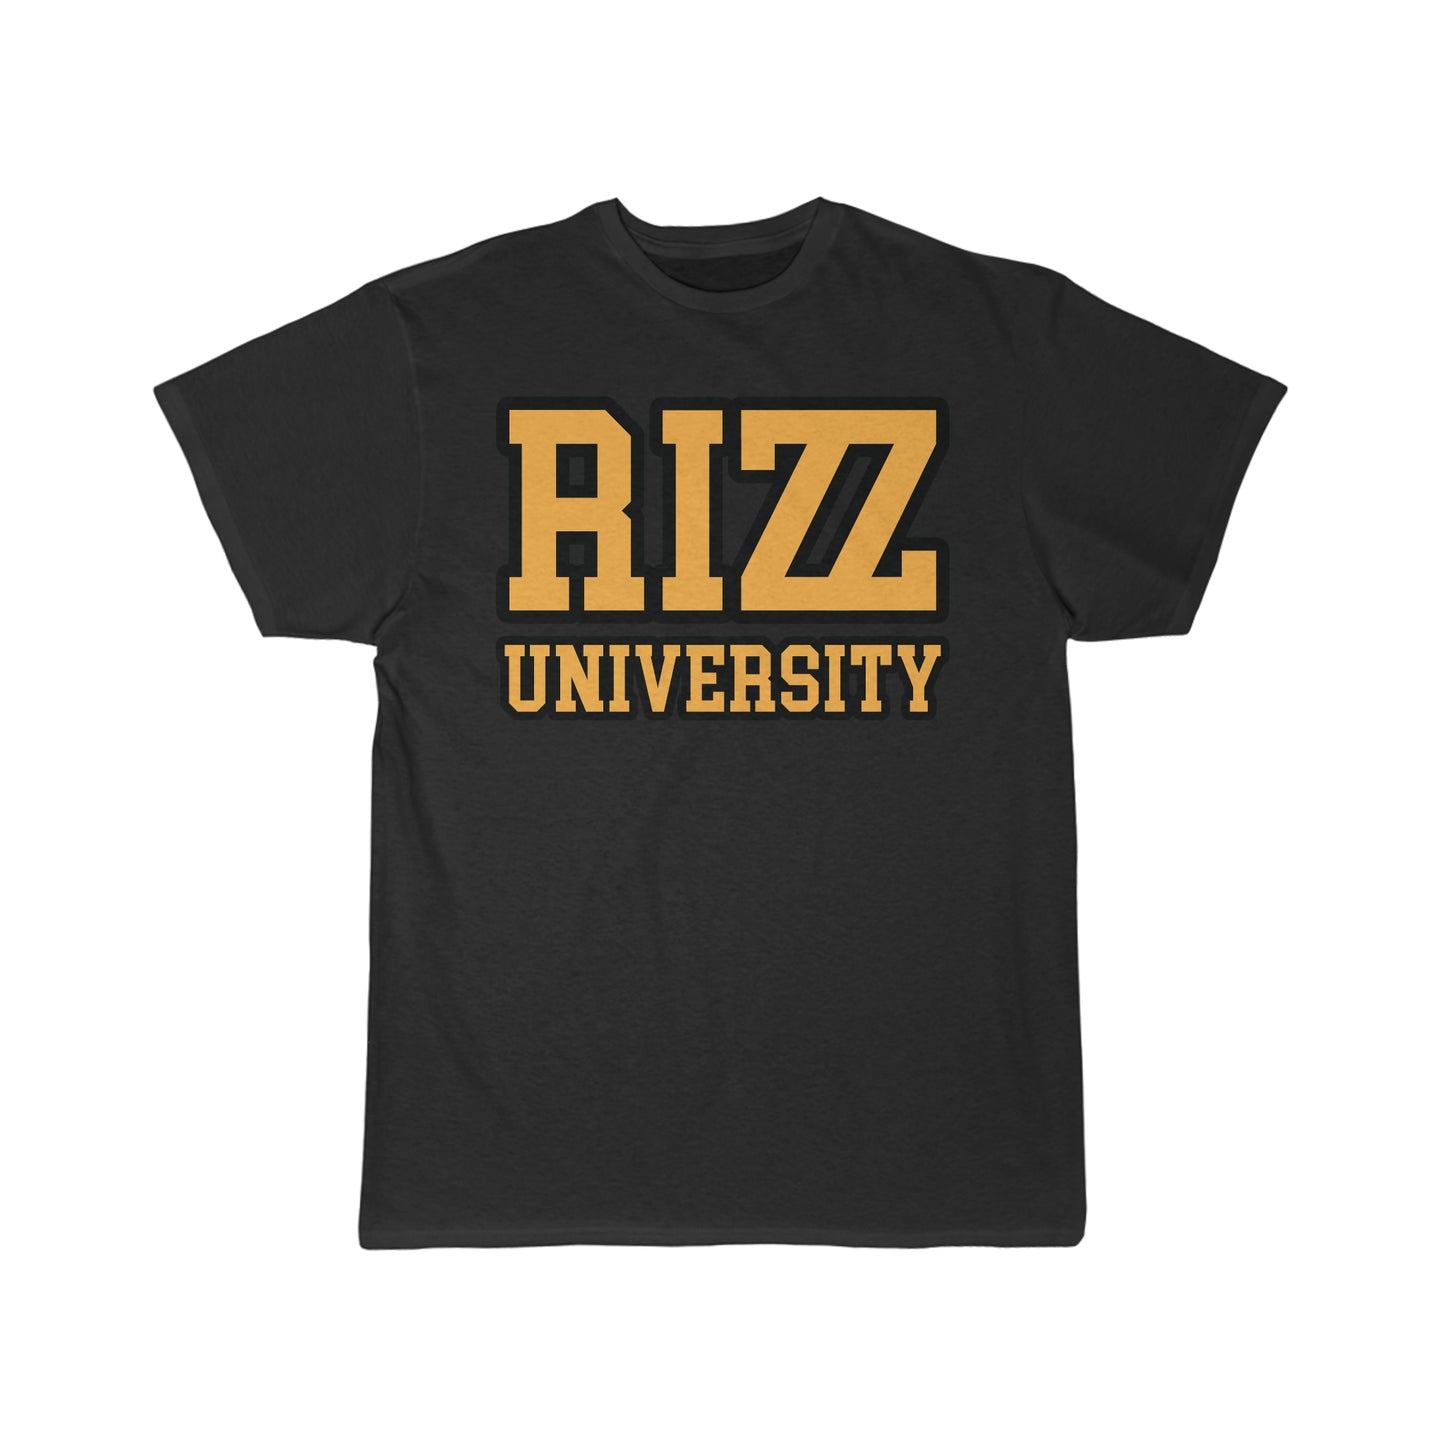 Rizz University Tee